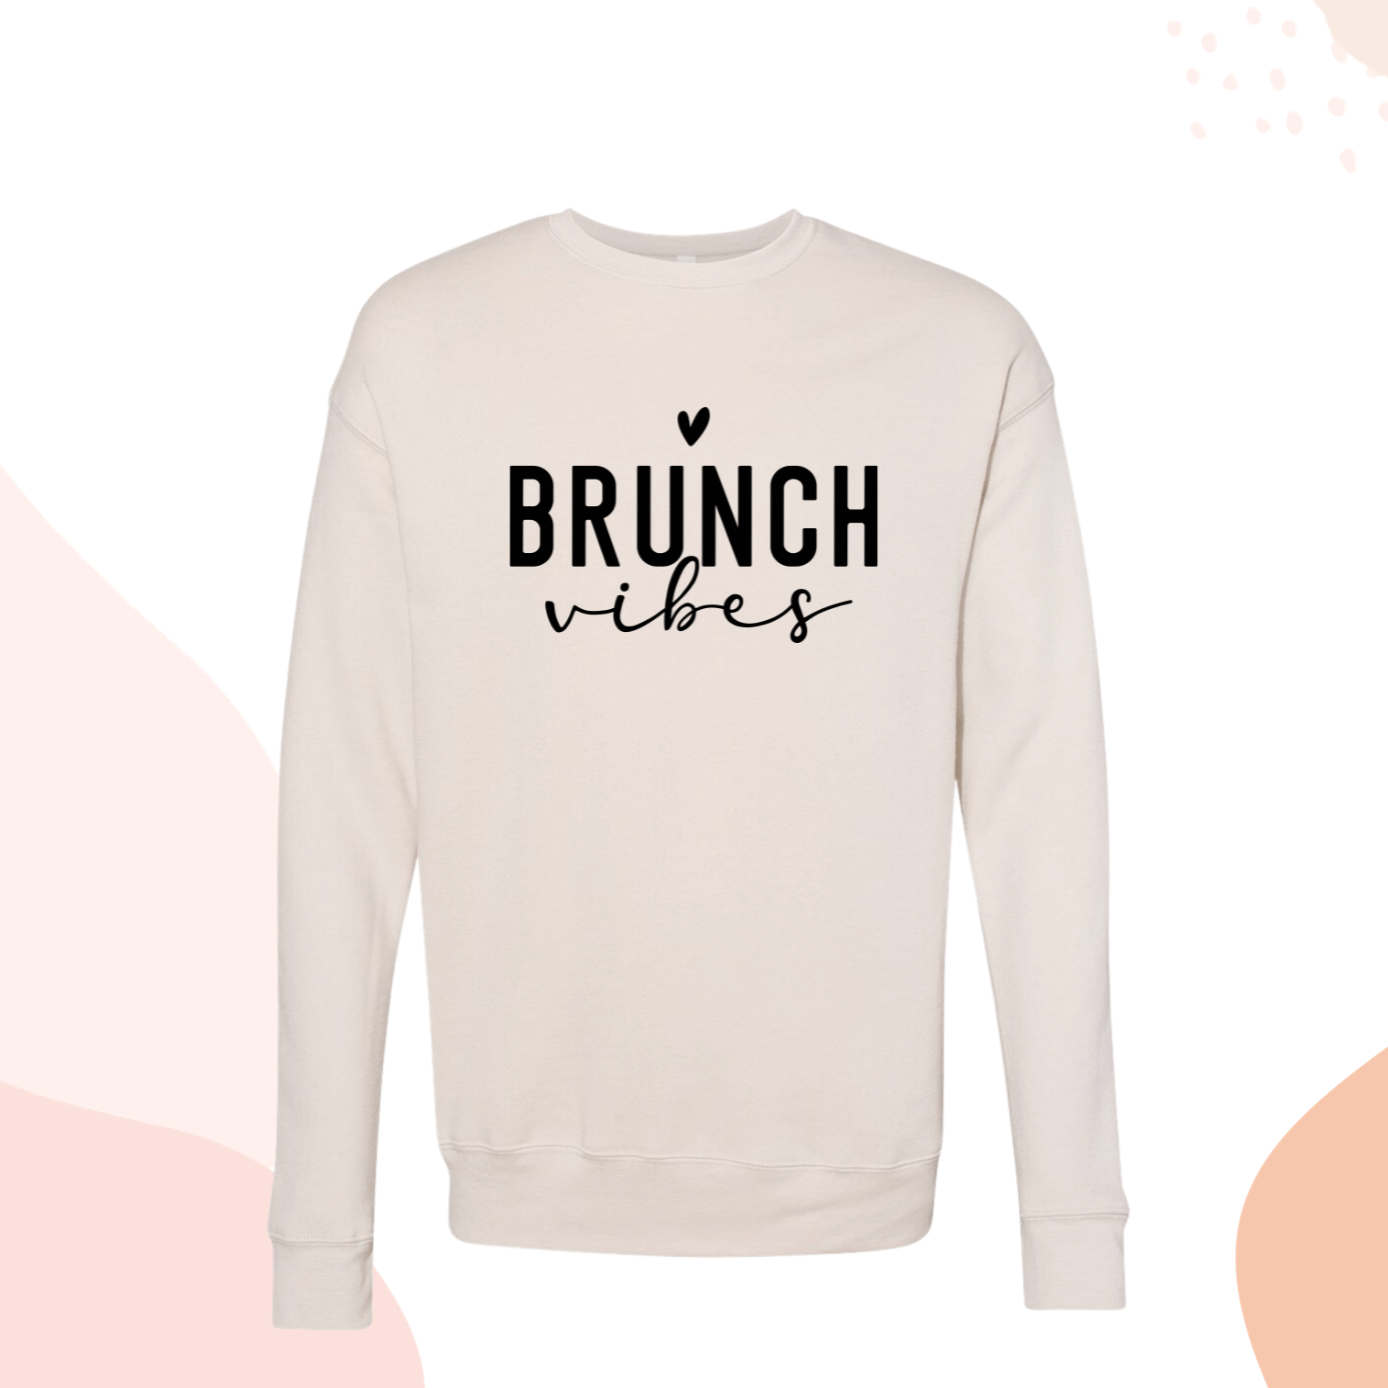 Brunch Vibes Sweatshirt Cream Crewneck for Women Brunch Outfit ideas Cream Sweater for Her